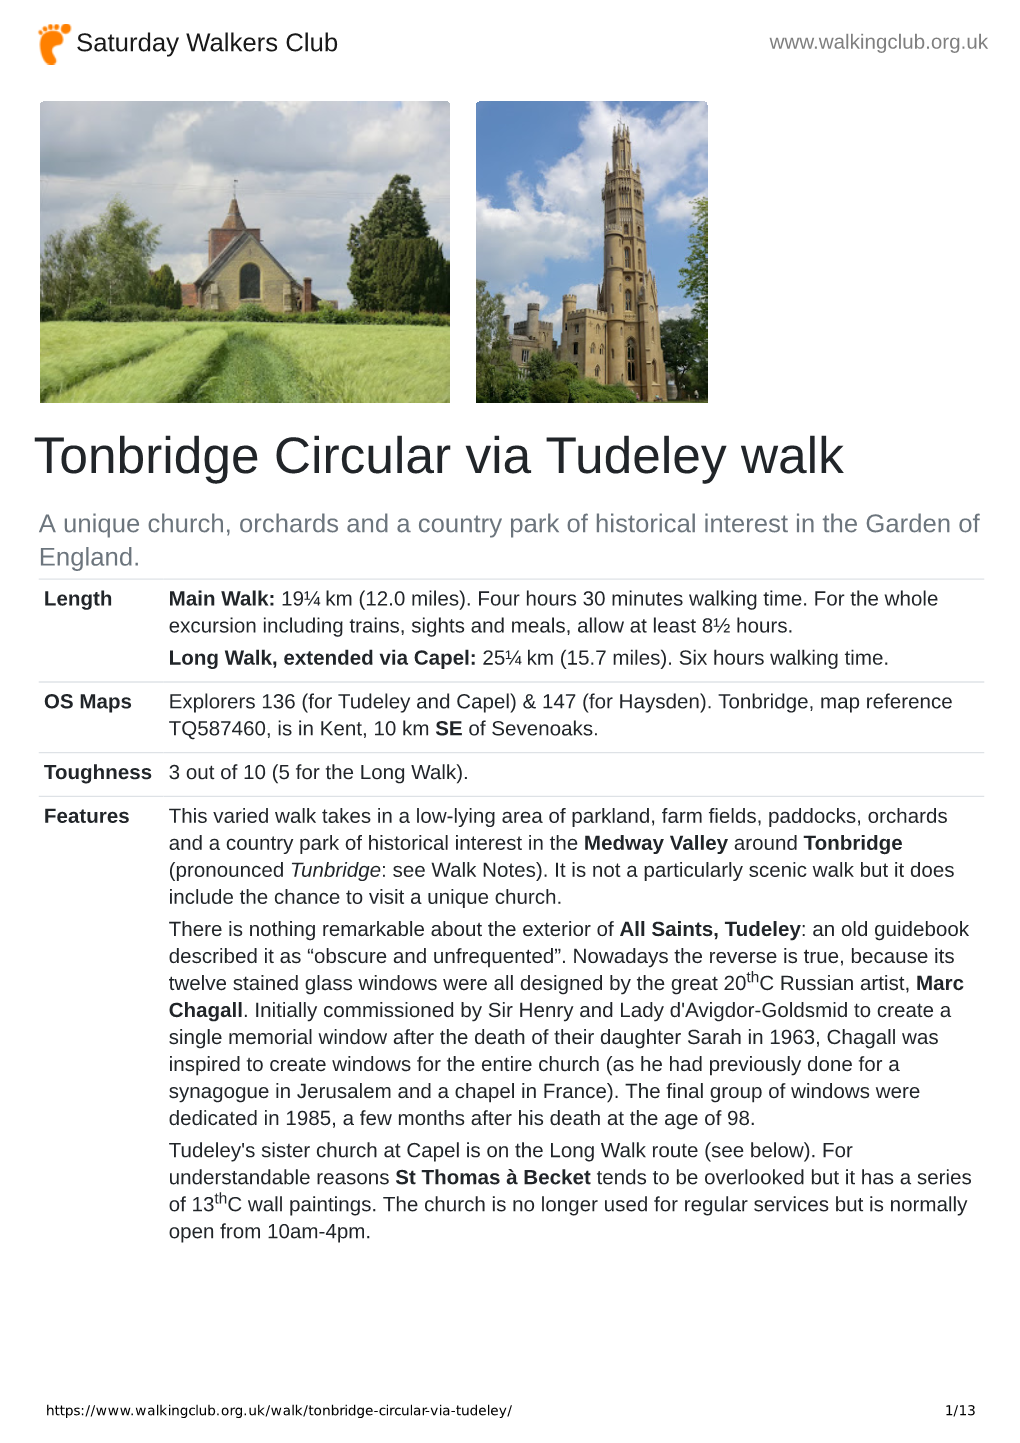 Tonbridge Circular Via Tudeley Walk